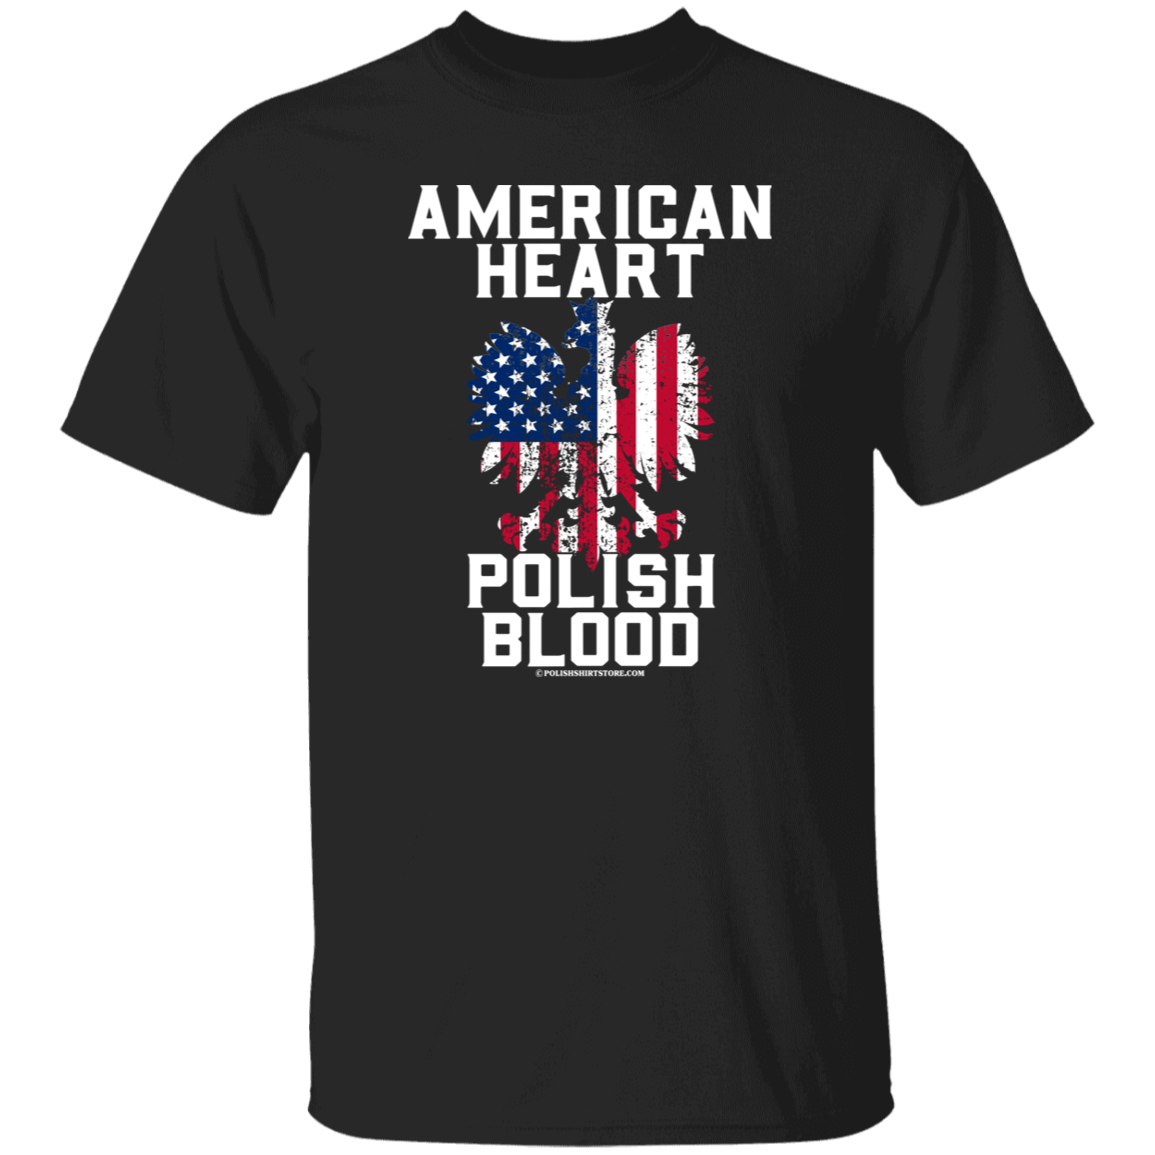 American Heart Polish Blood Apparel CustomCat G500 5.3 oz. T-Shirt Black S